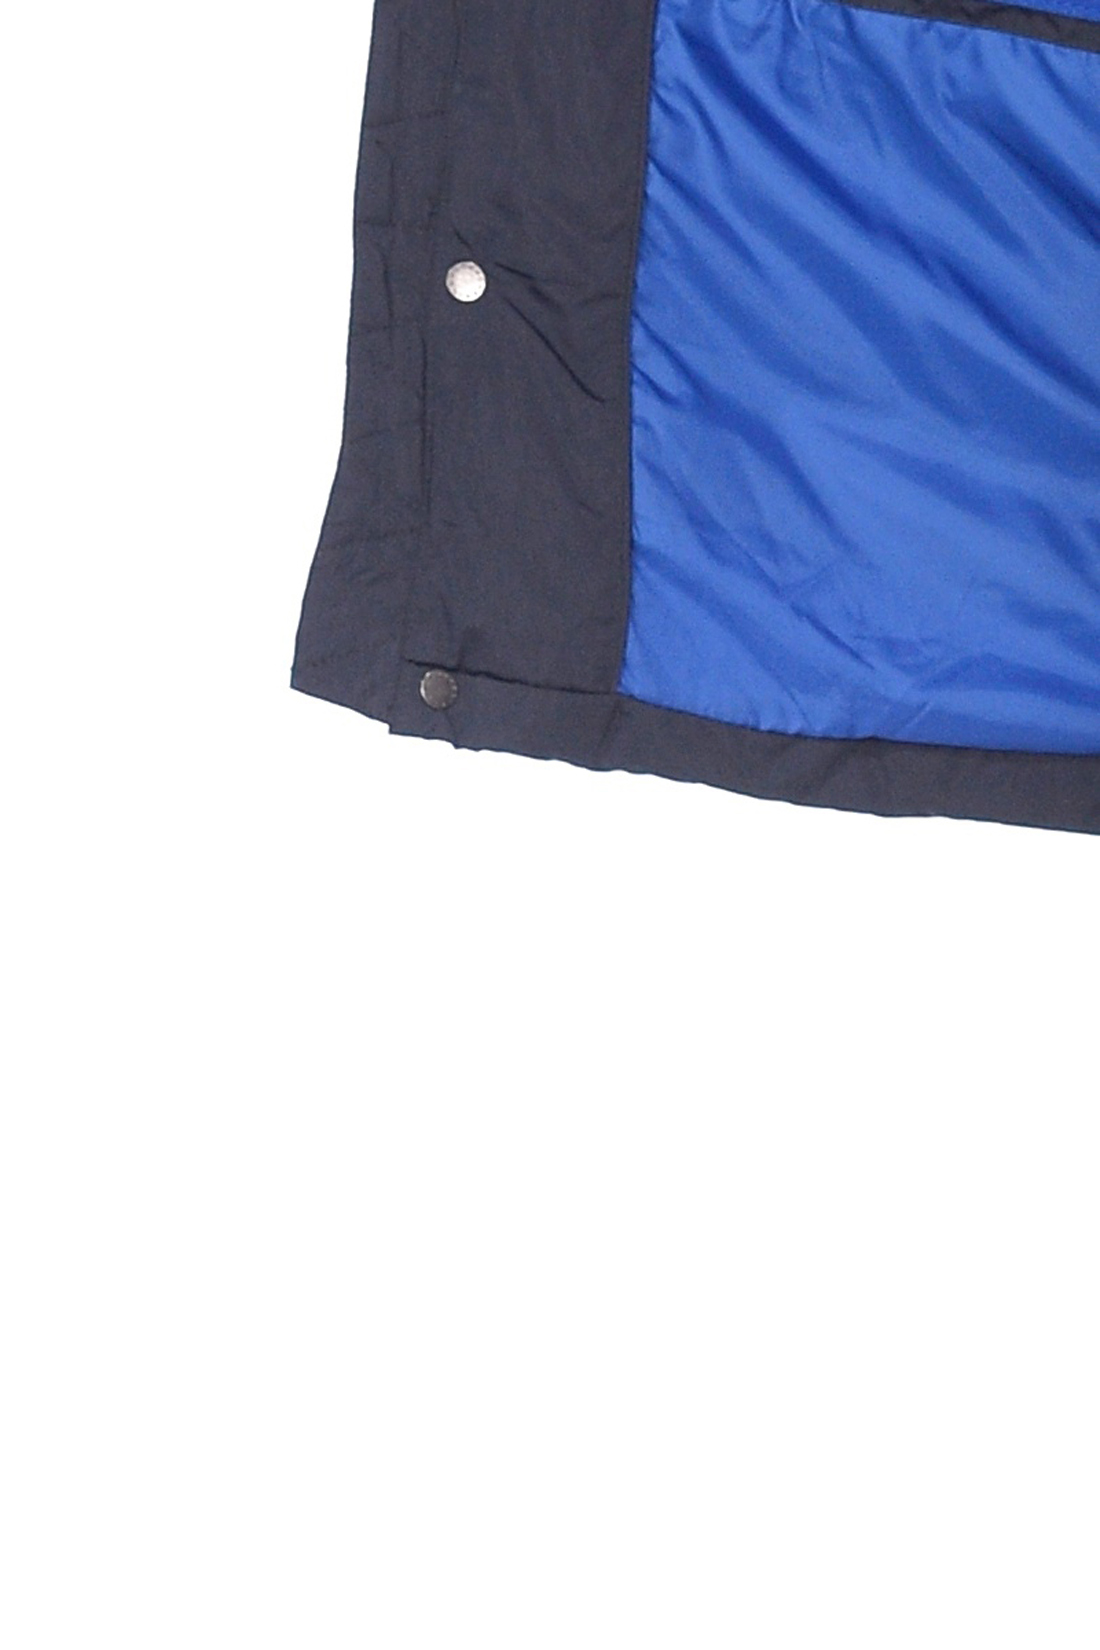 Пуховик с ярко-синей подкладкой (арт. baon B508508), размер XXL, цвет серый Пуховик с ярко-синей подкладкой (арт. baon B508508) - фото 4